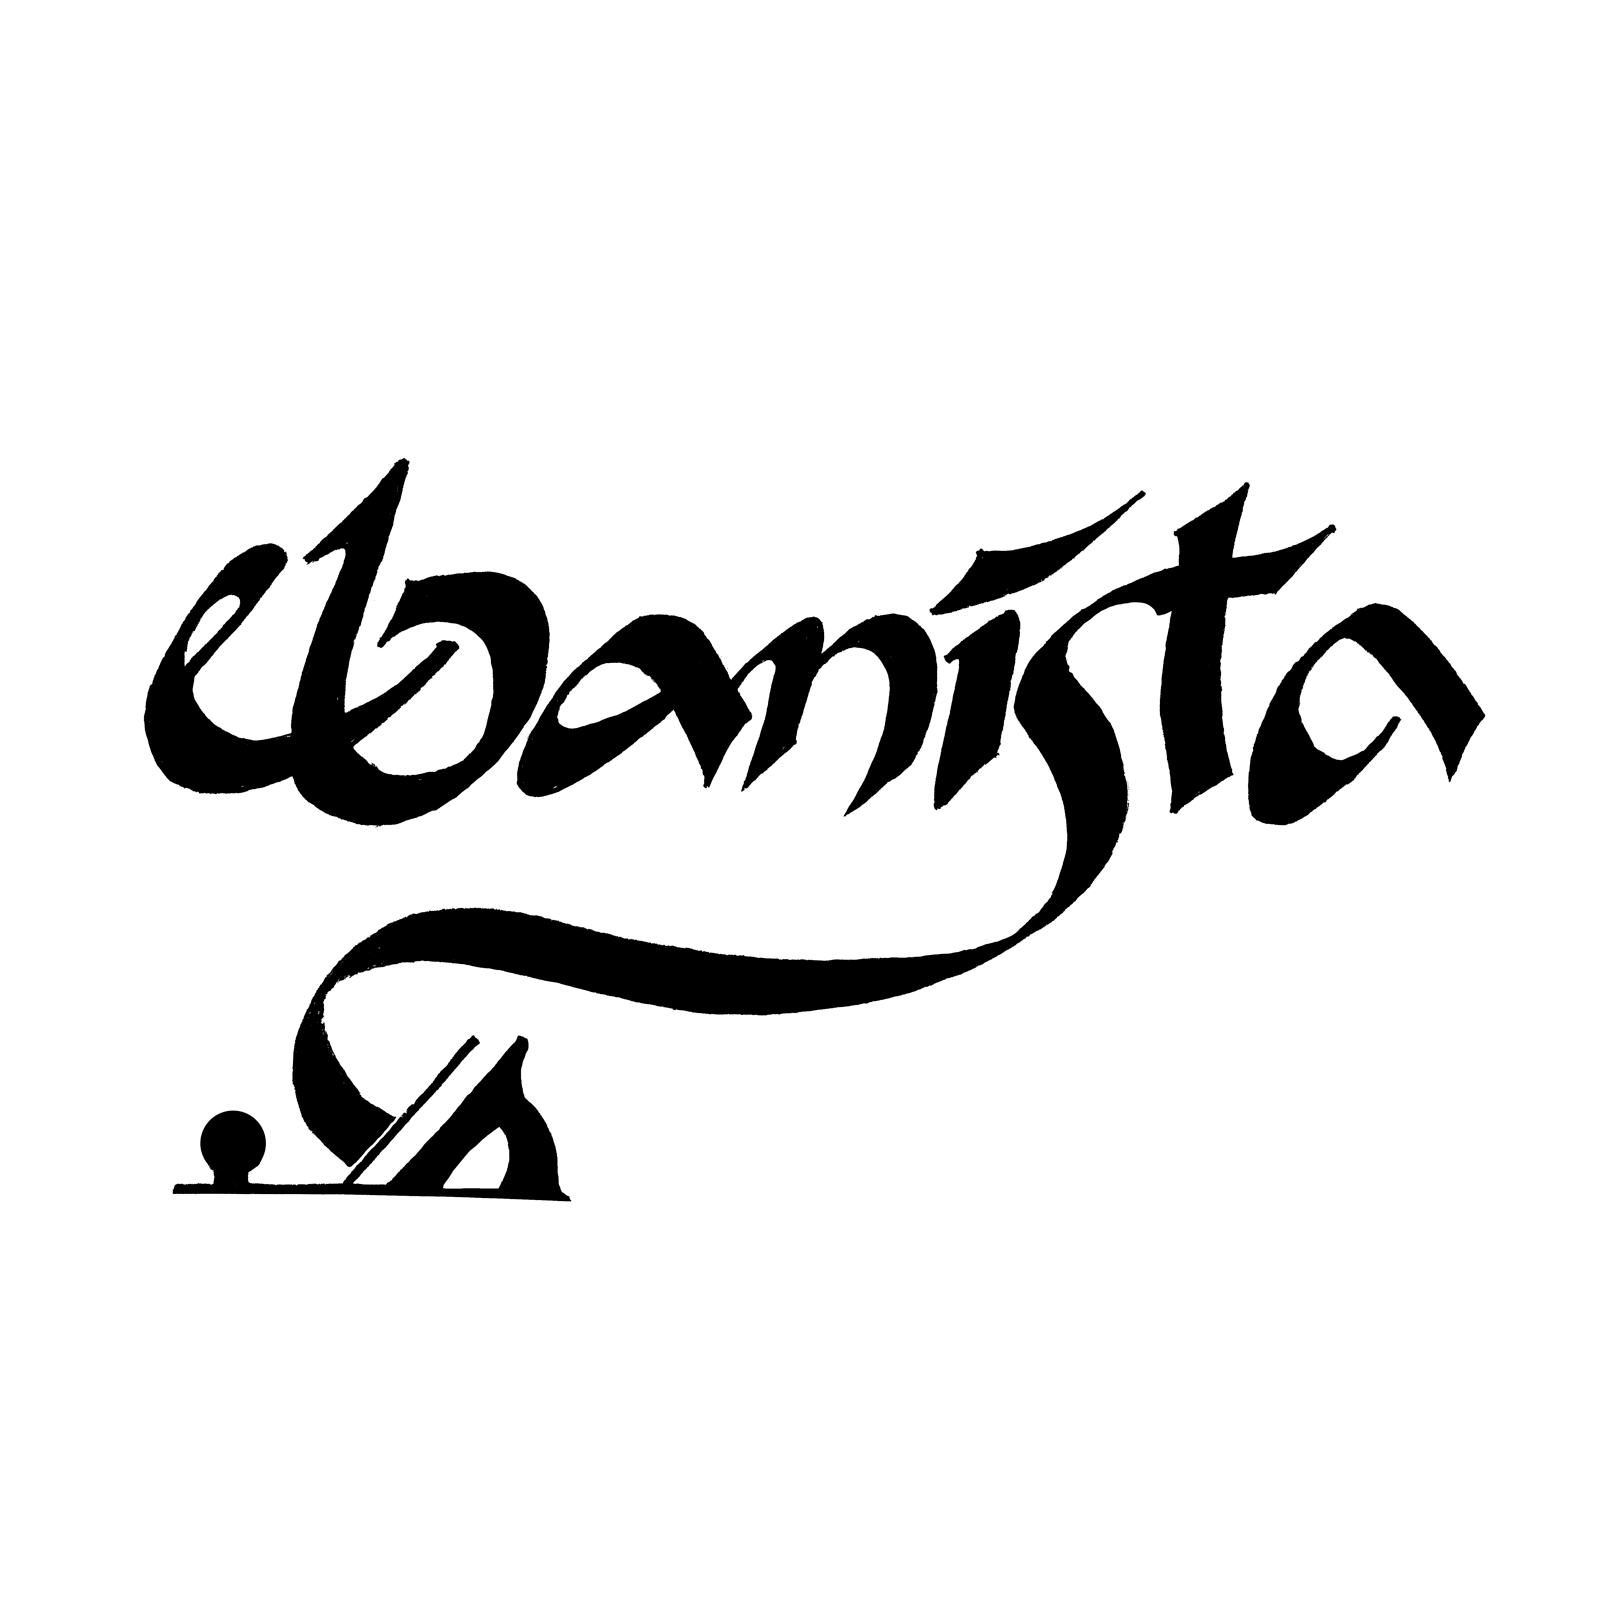 Ebanista School of Fine Woodworking Logo